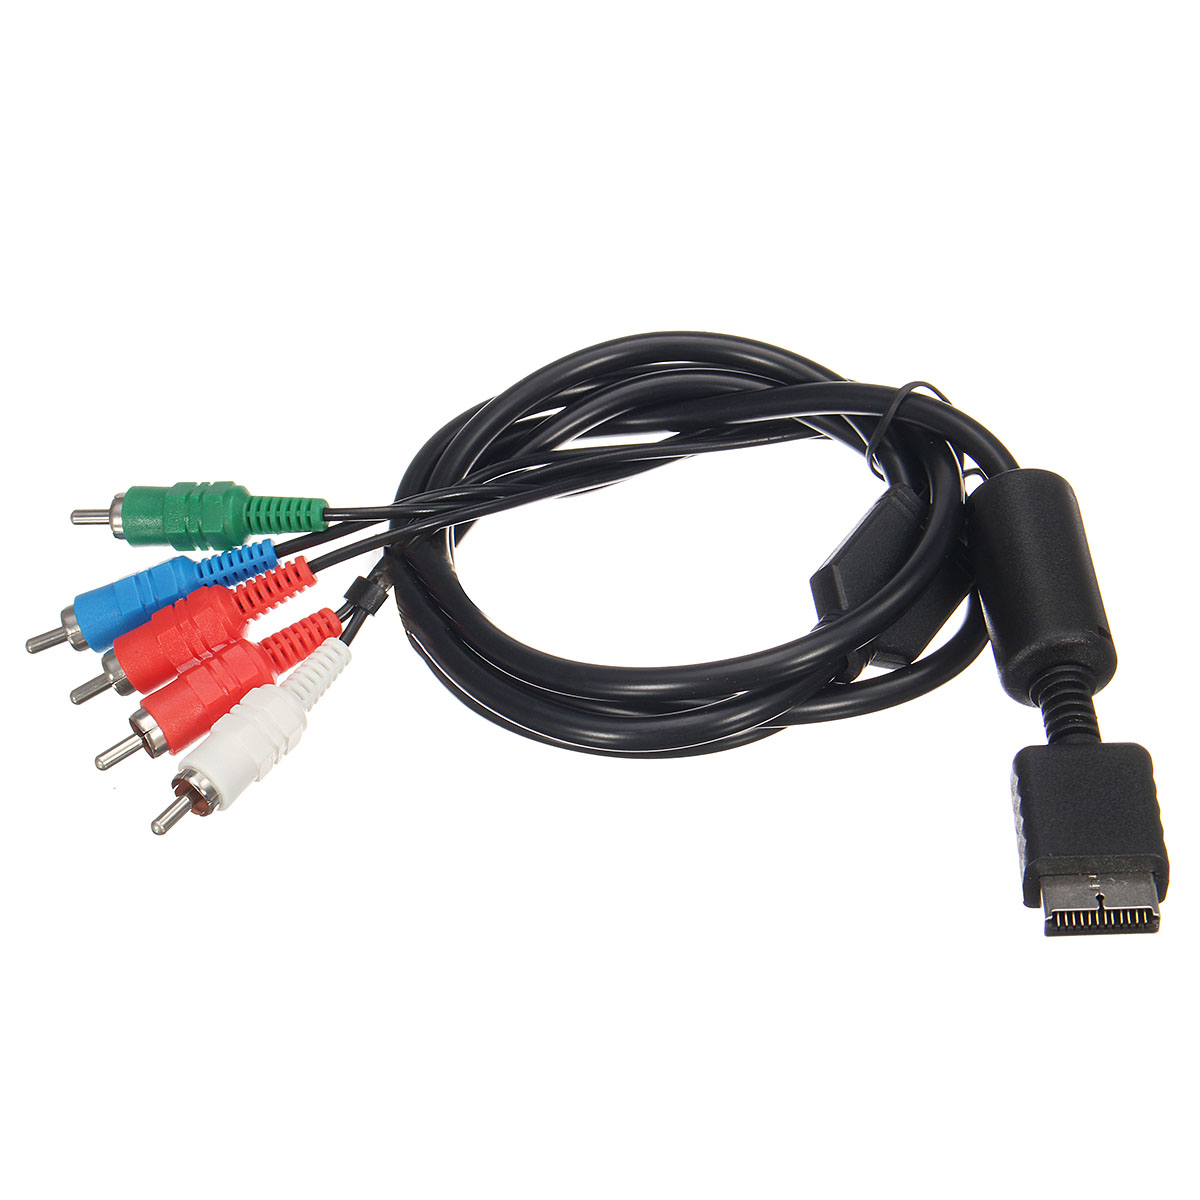 

HD Компонентный RCA AV-видео-аудио кабель Шнур для SONY для Playstation 2 3 PS2 PS3 Тонкий